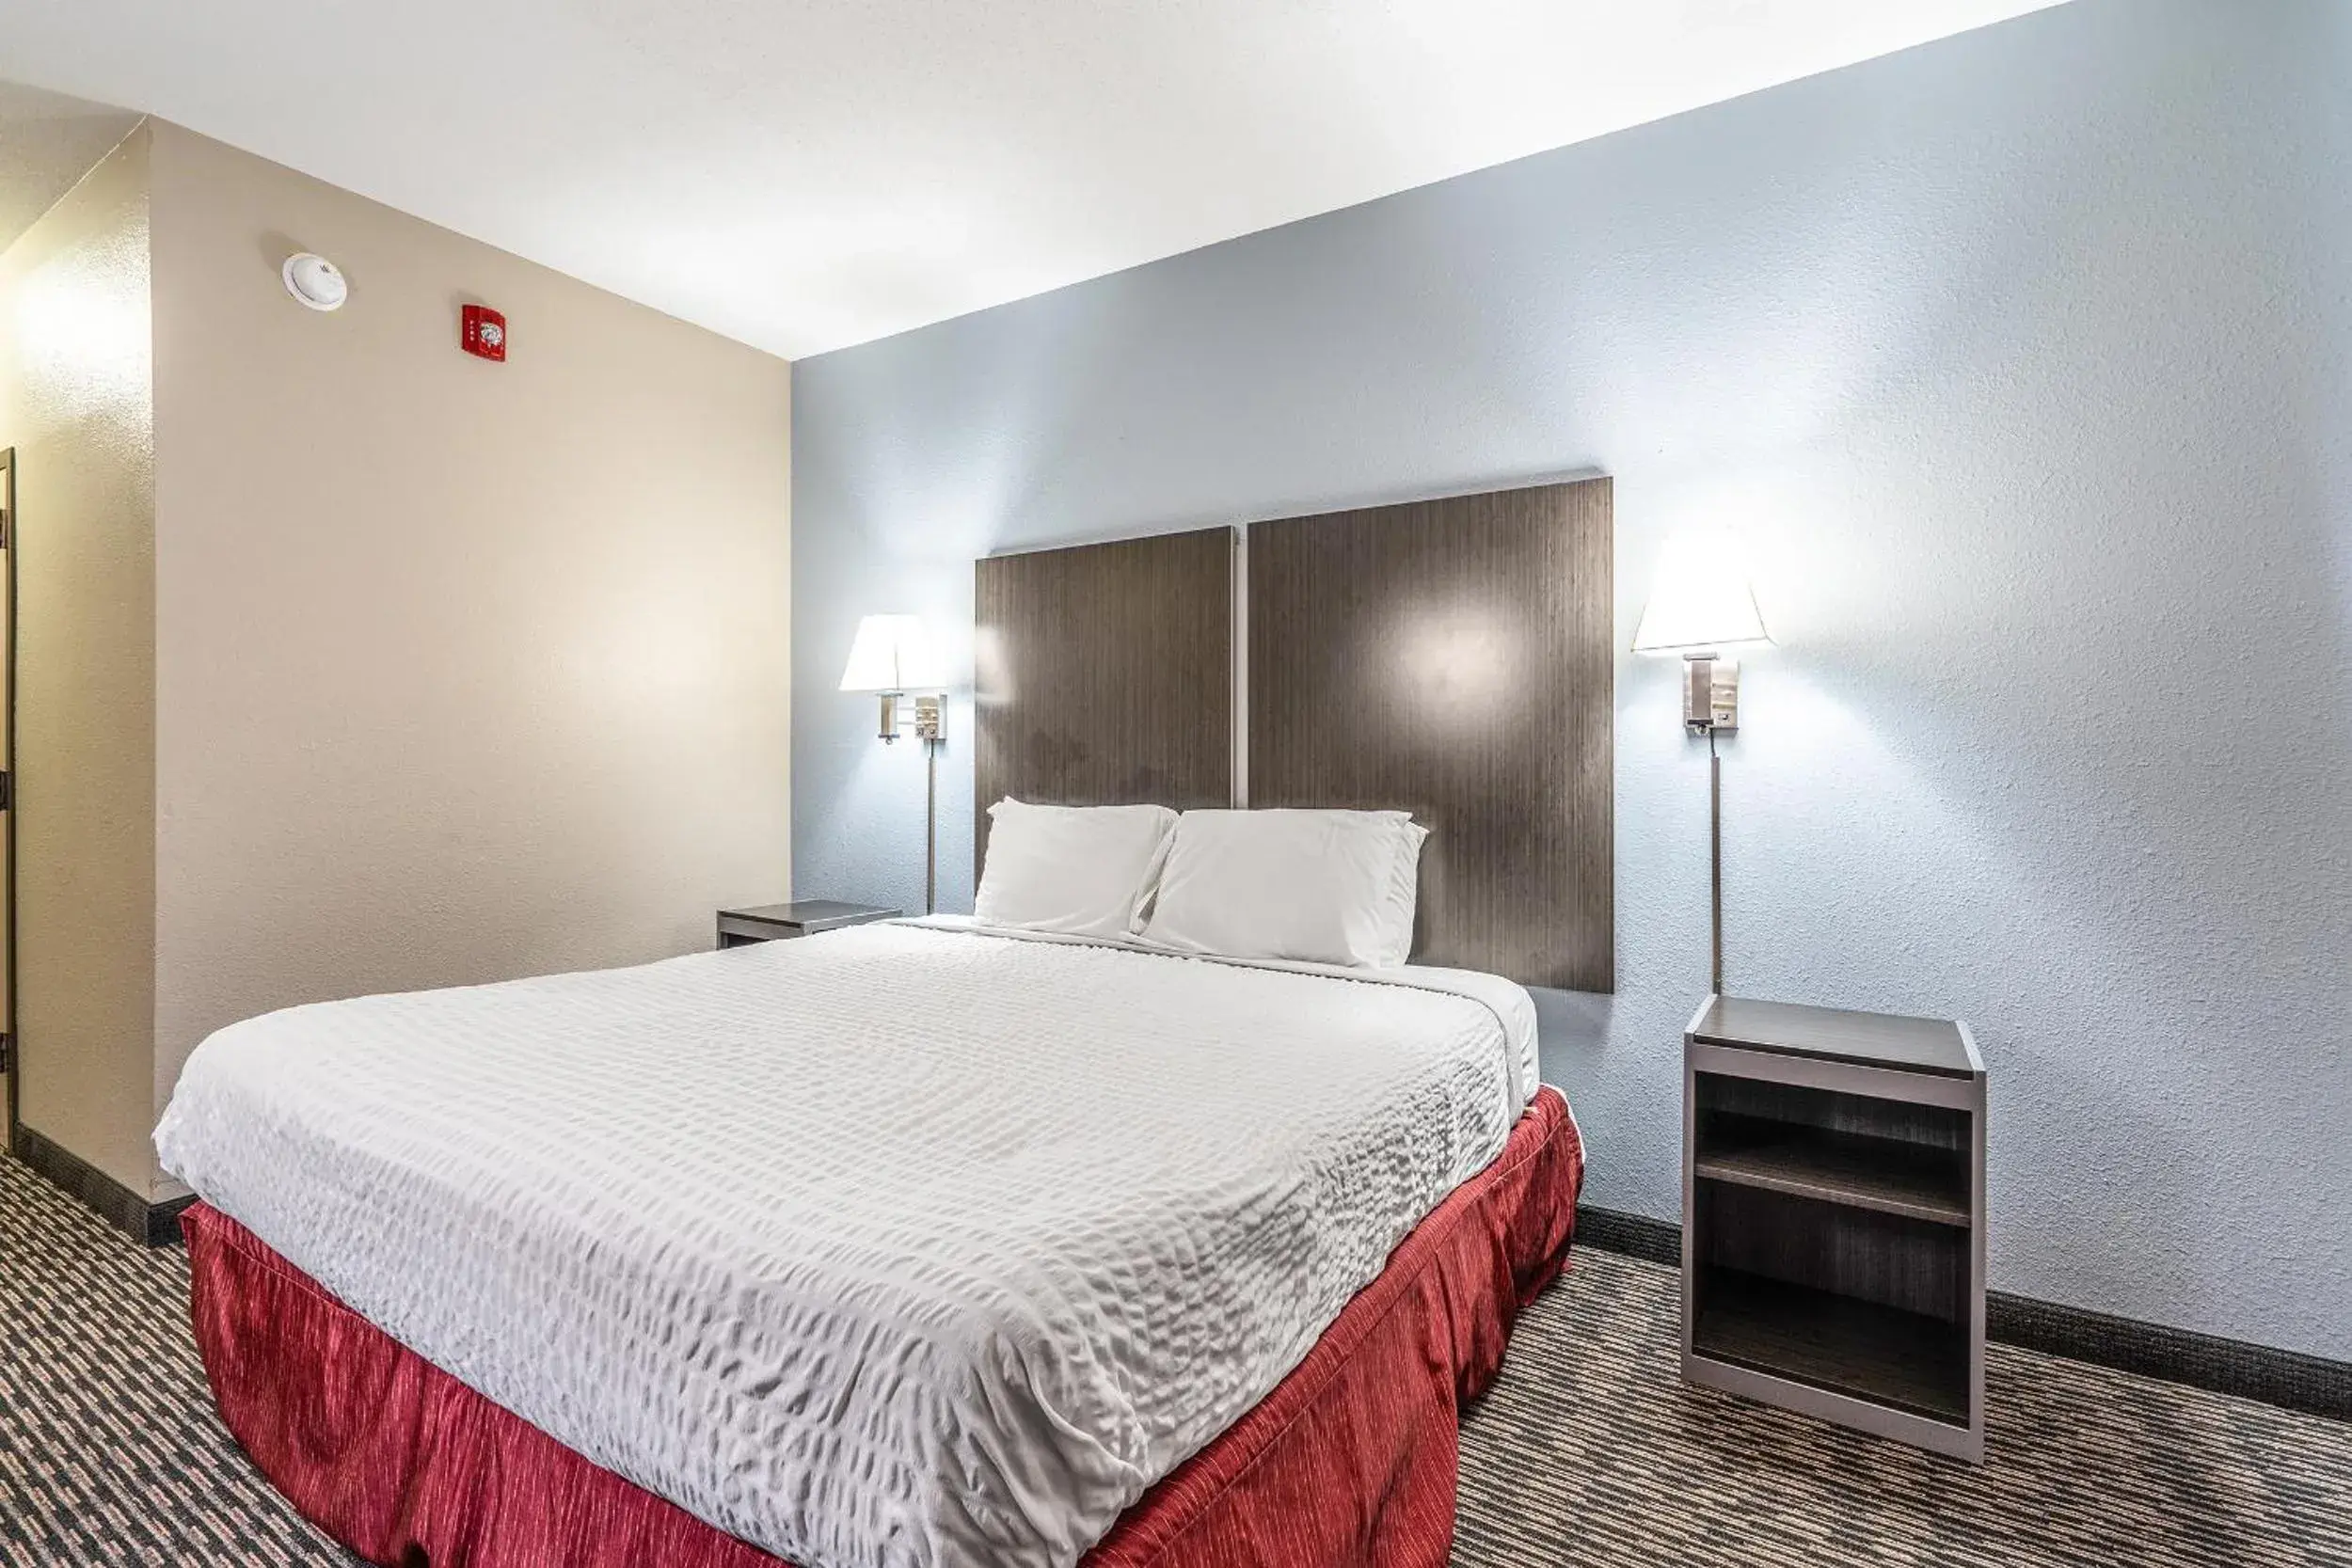 Bedroom, Bed in Americas Best Value Inn - Chattanooga